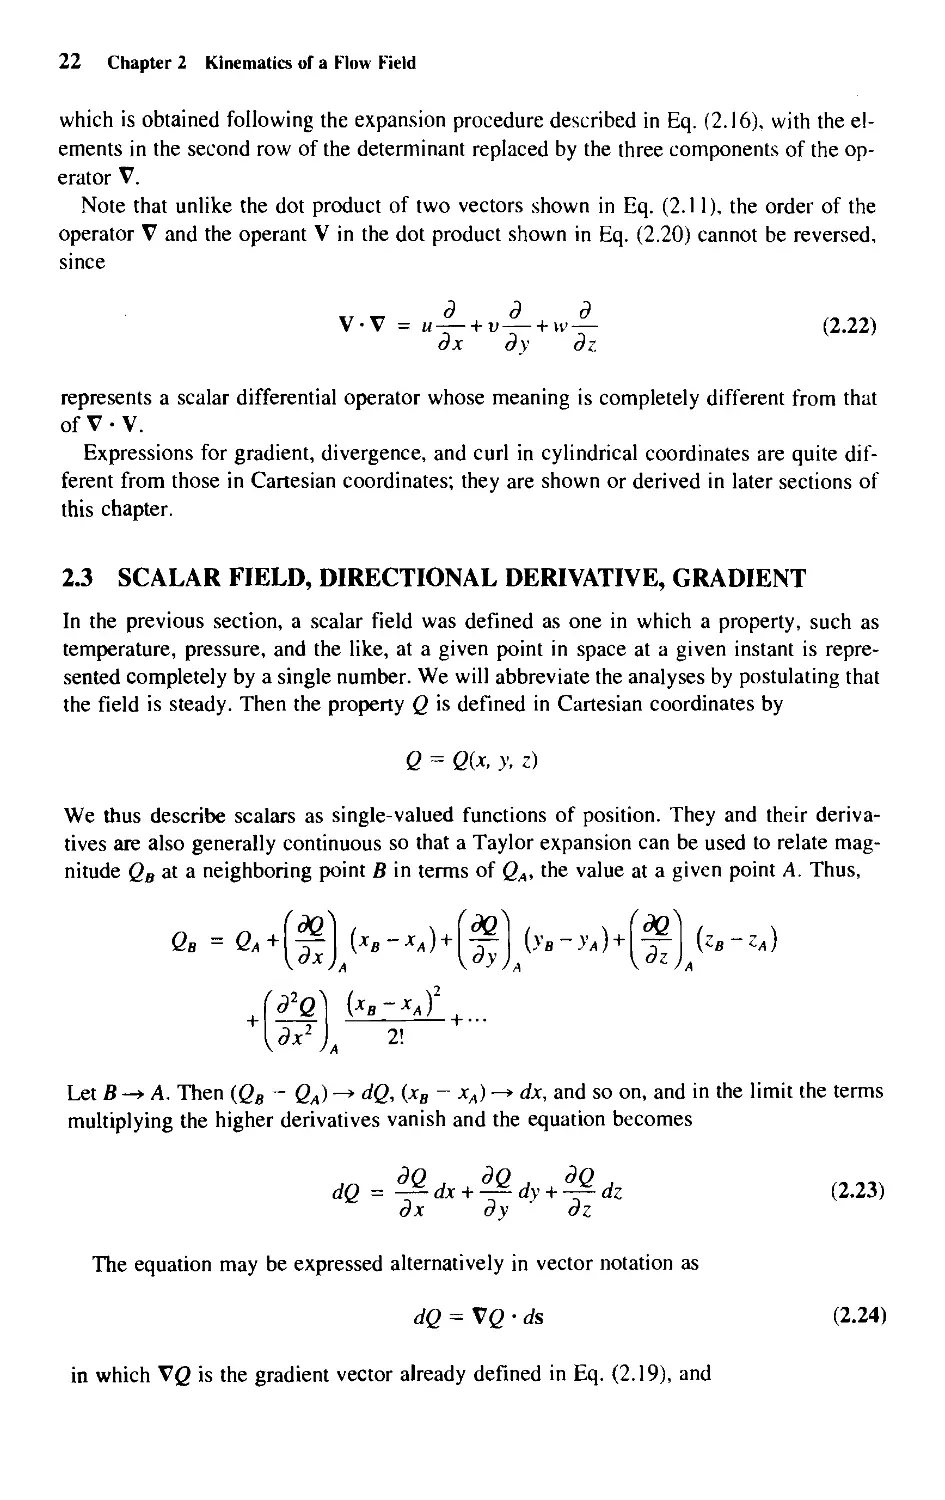 2.3 - Scalar Field, Directional Derivative, Gradient